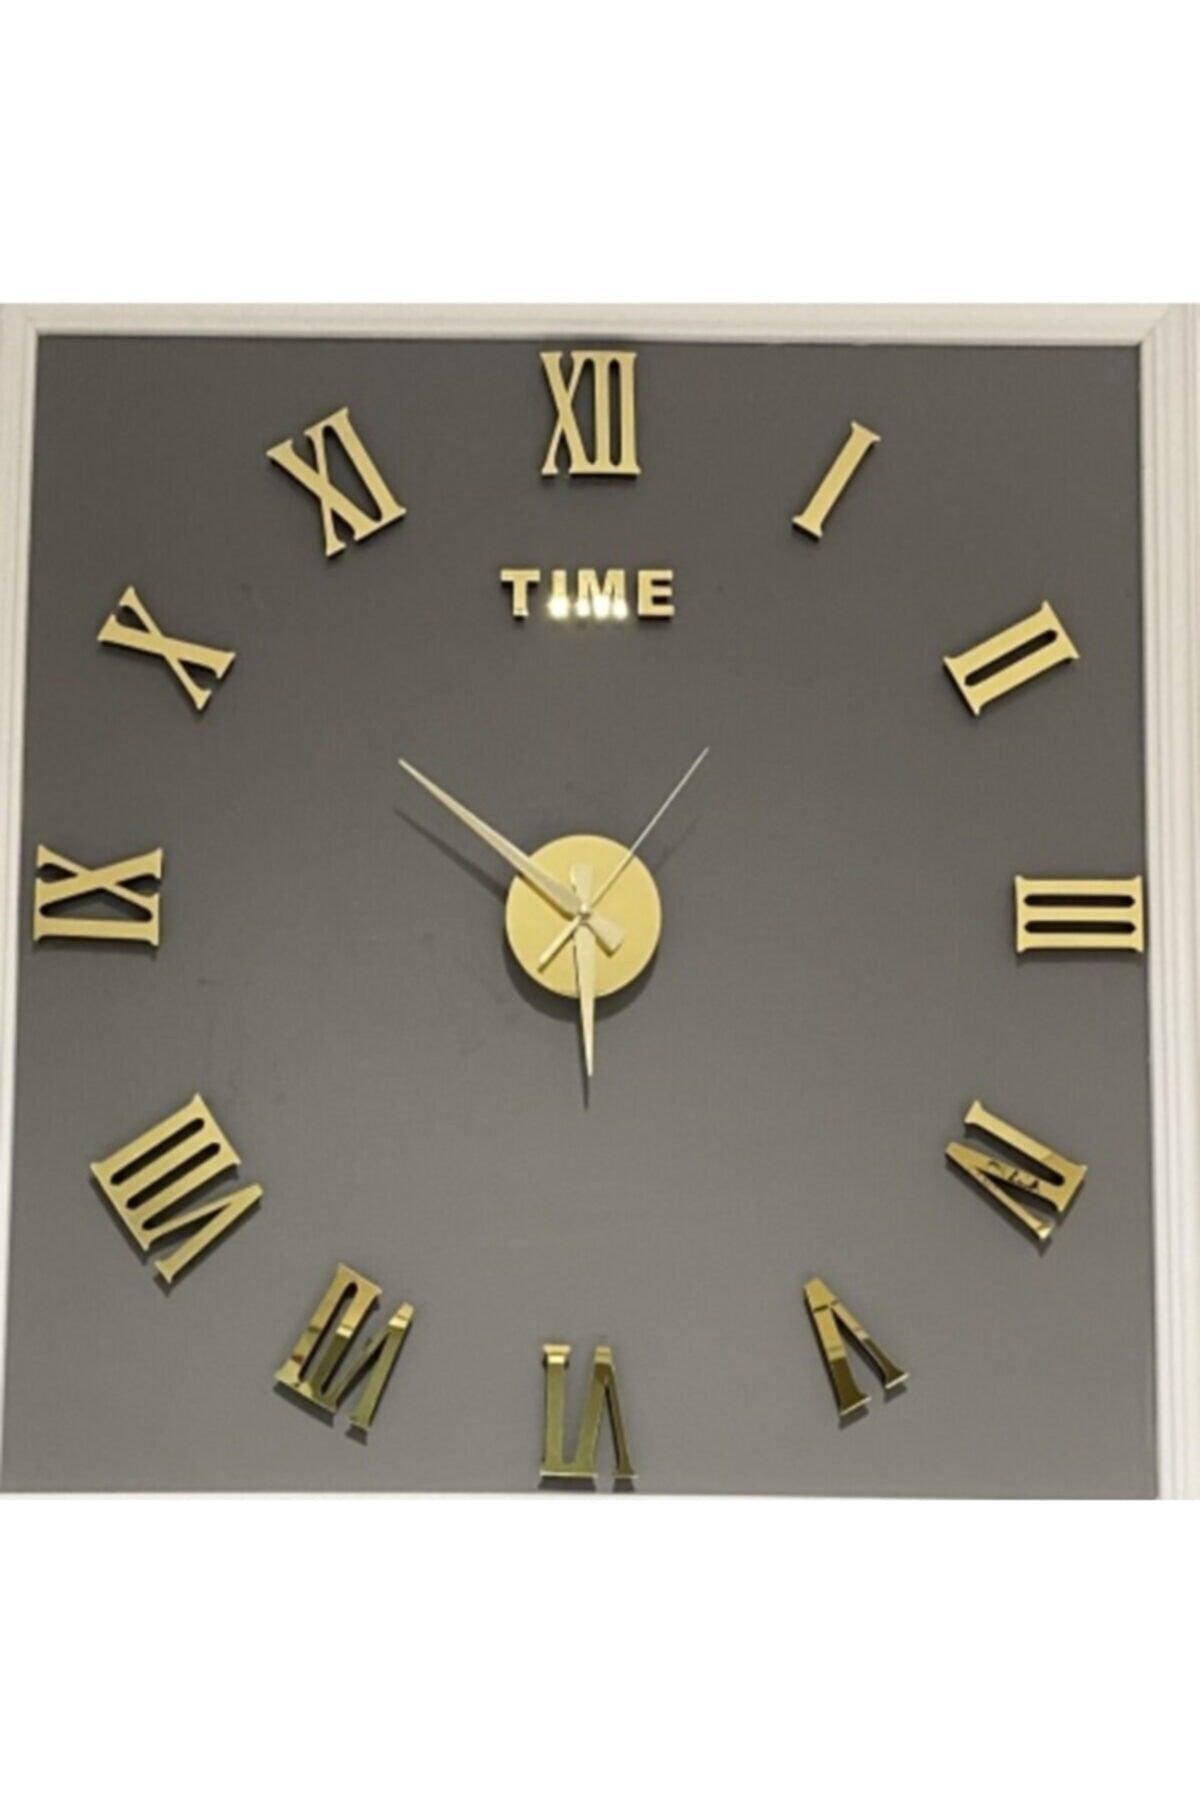 Plexi Belly Wall Clock Large 3d Roman Numeral Wall Clock Gold - Swordslife